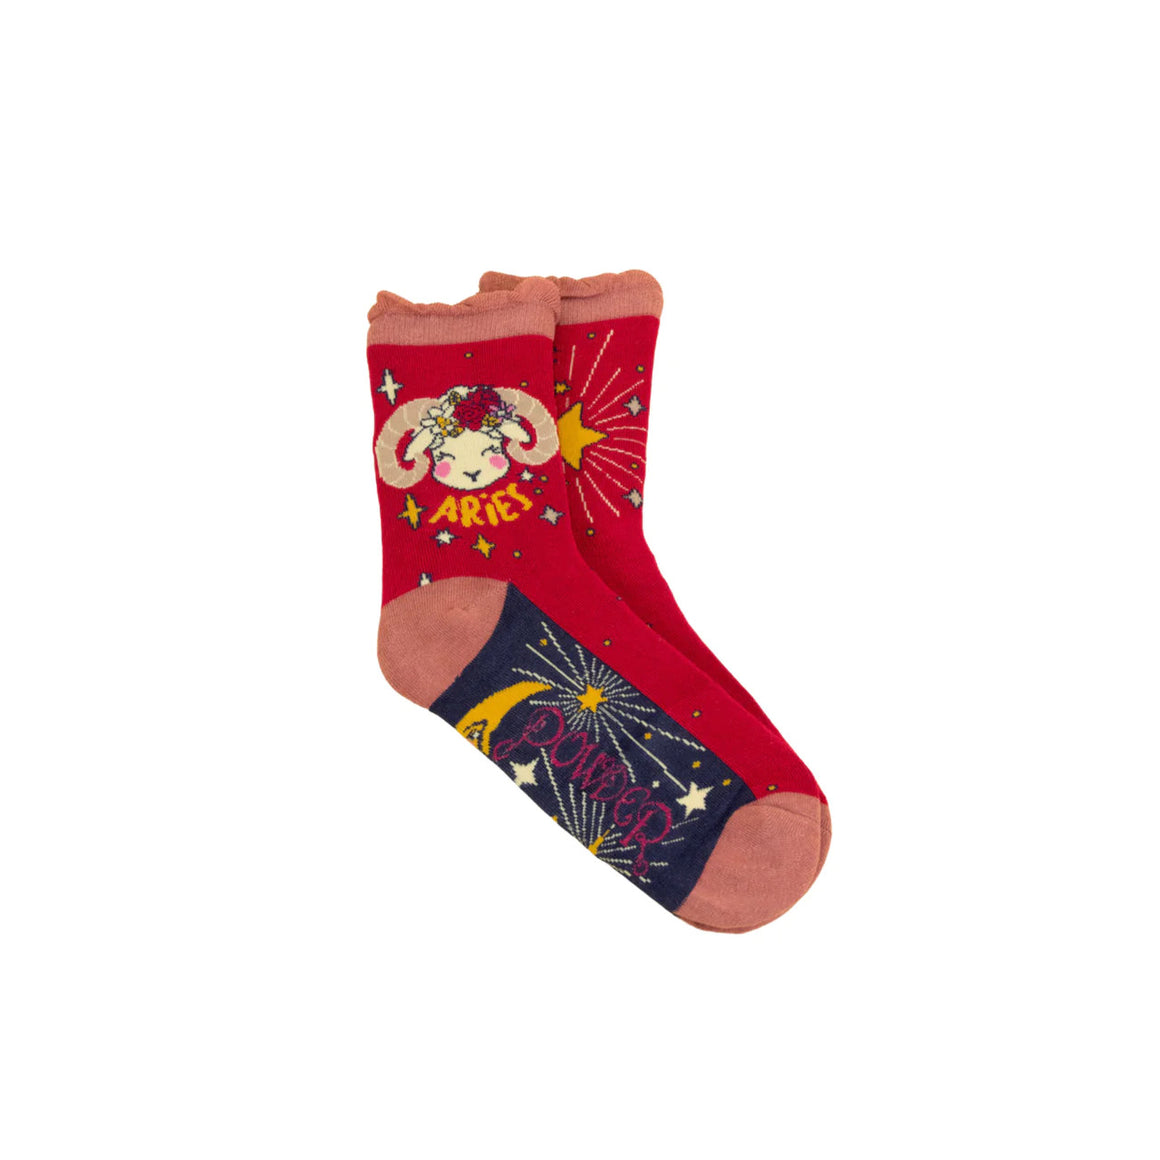 Aries Zodiac Socks from Powder Designs